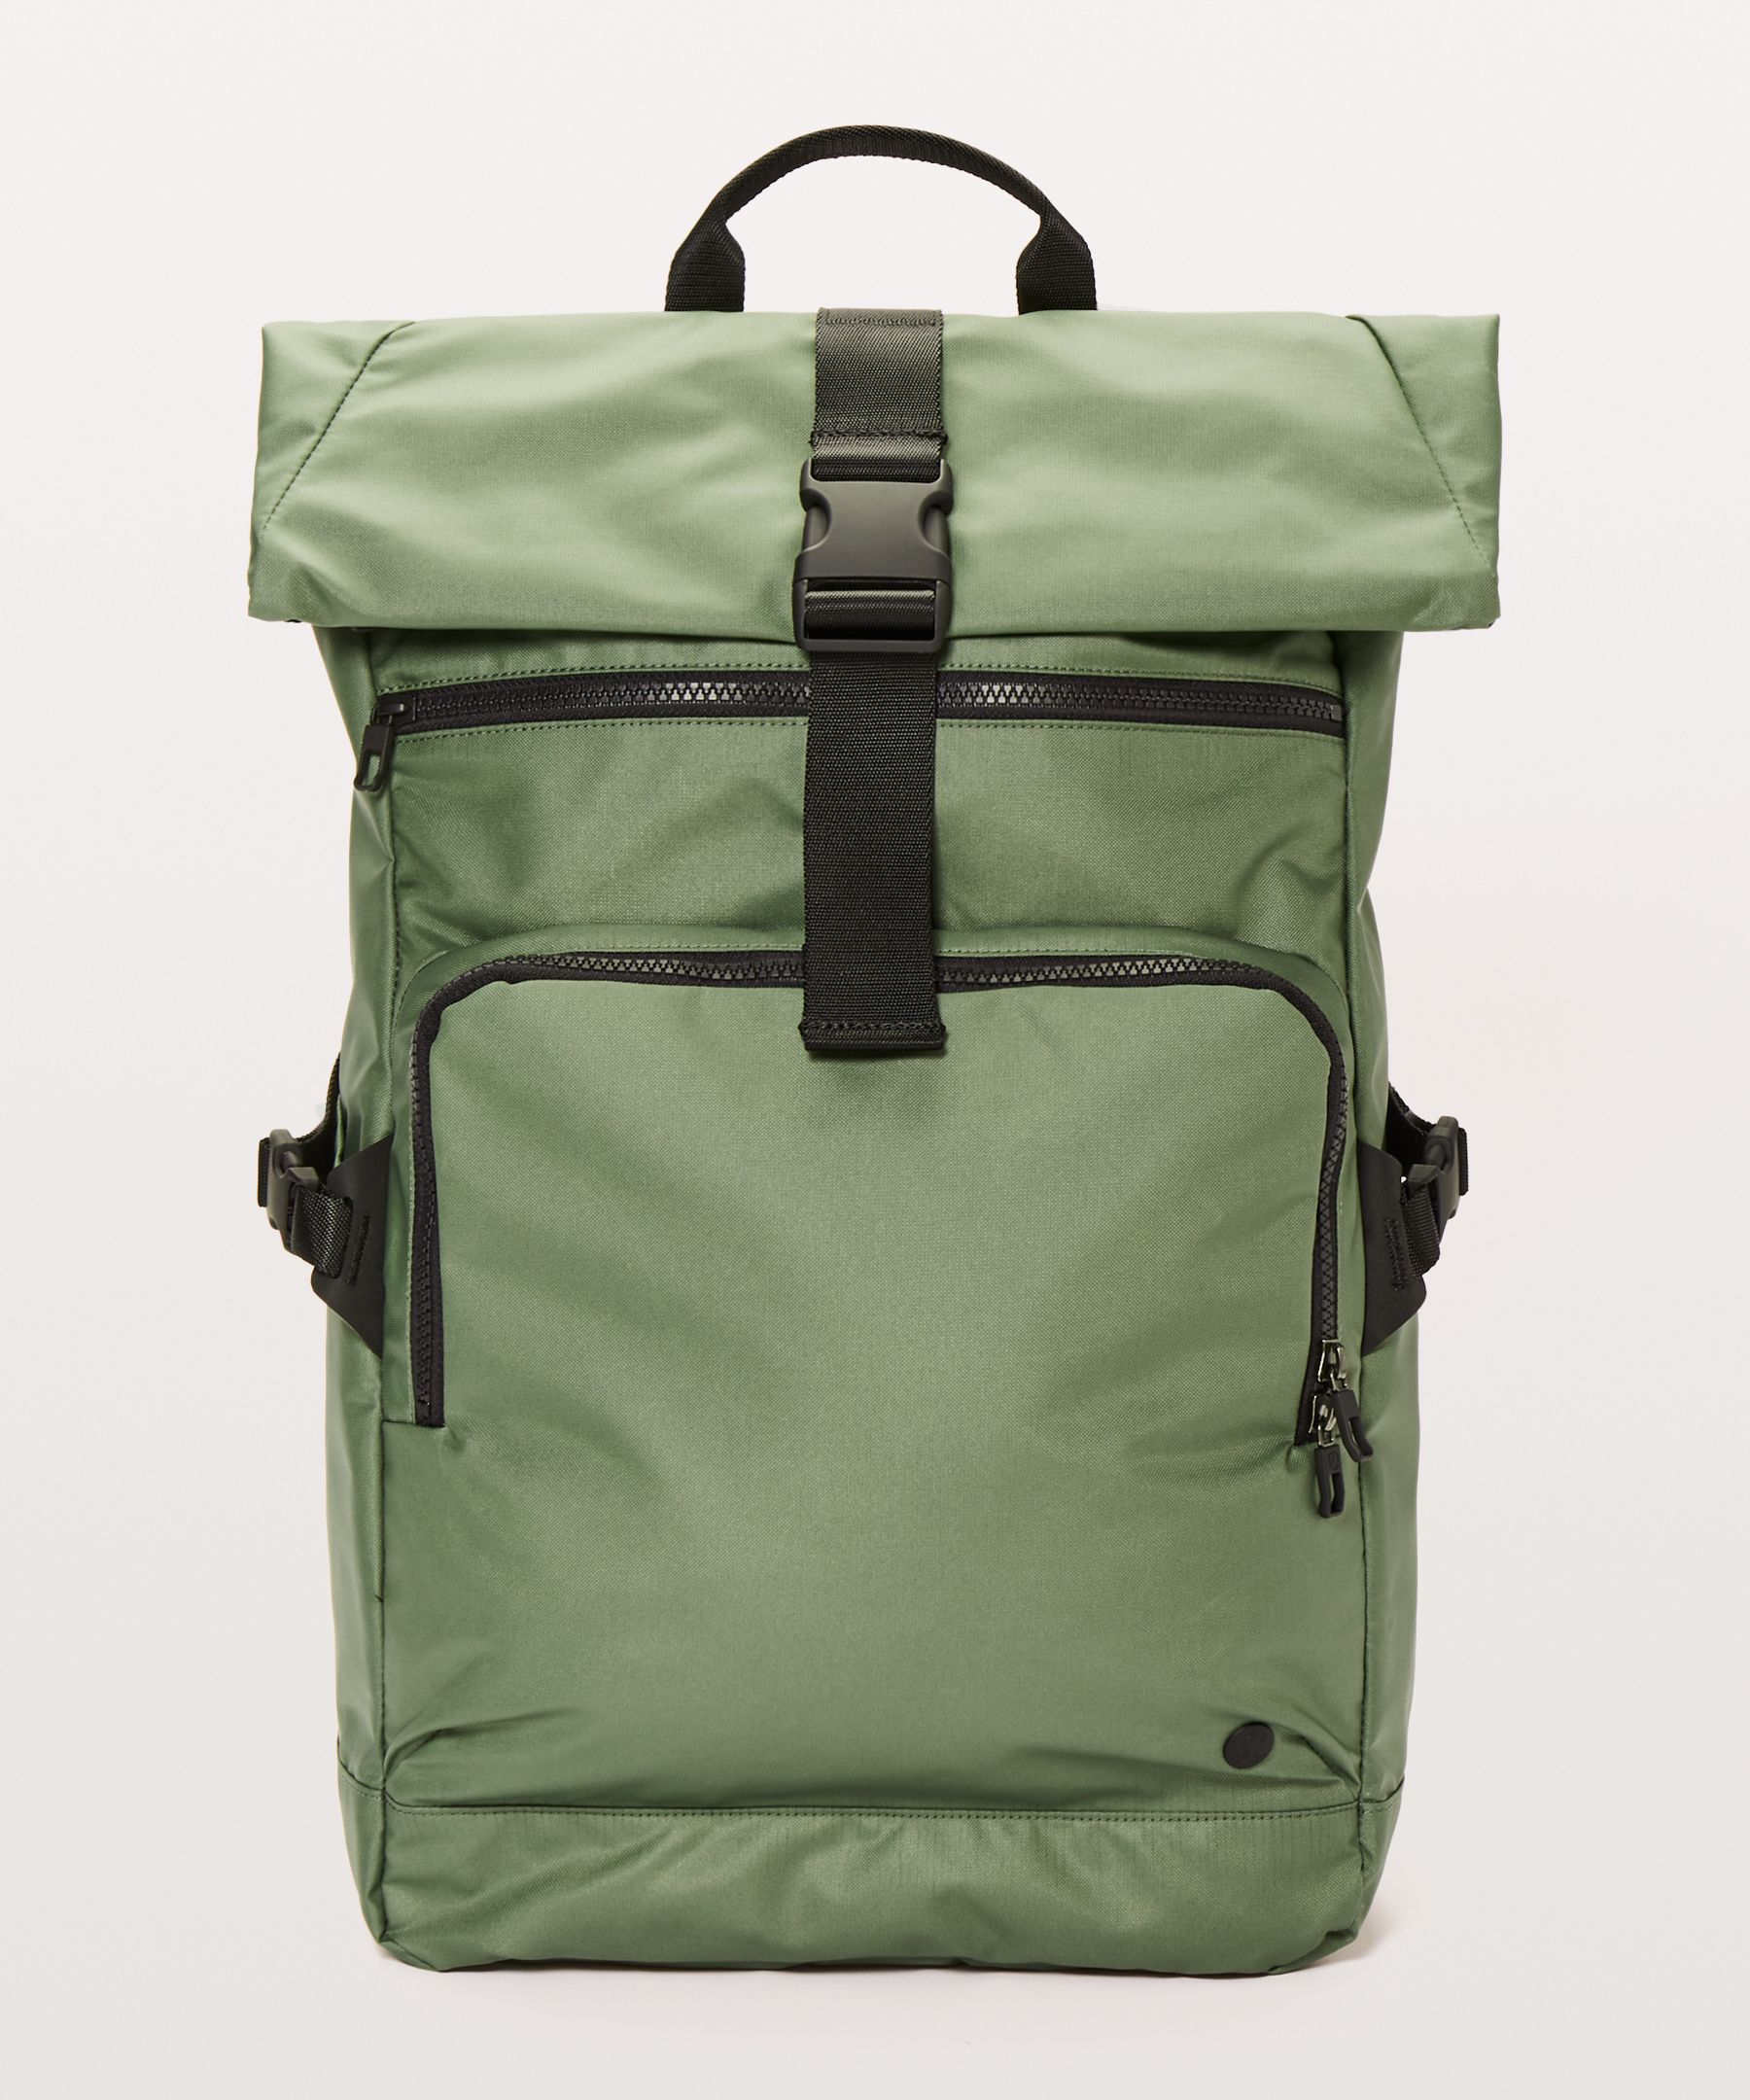 Lululemon Not Lost Backpack In Green